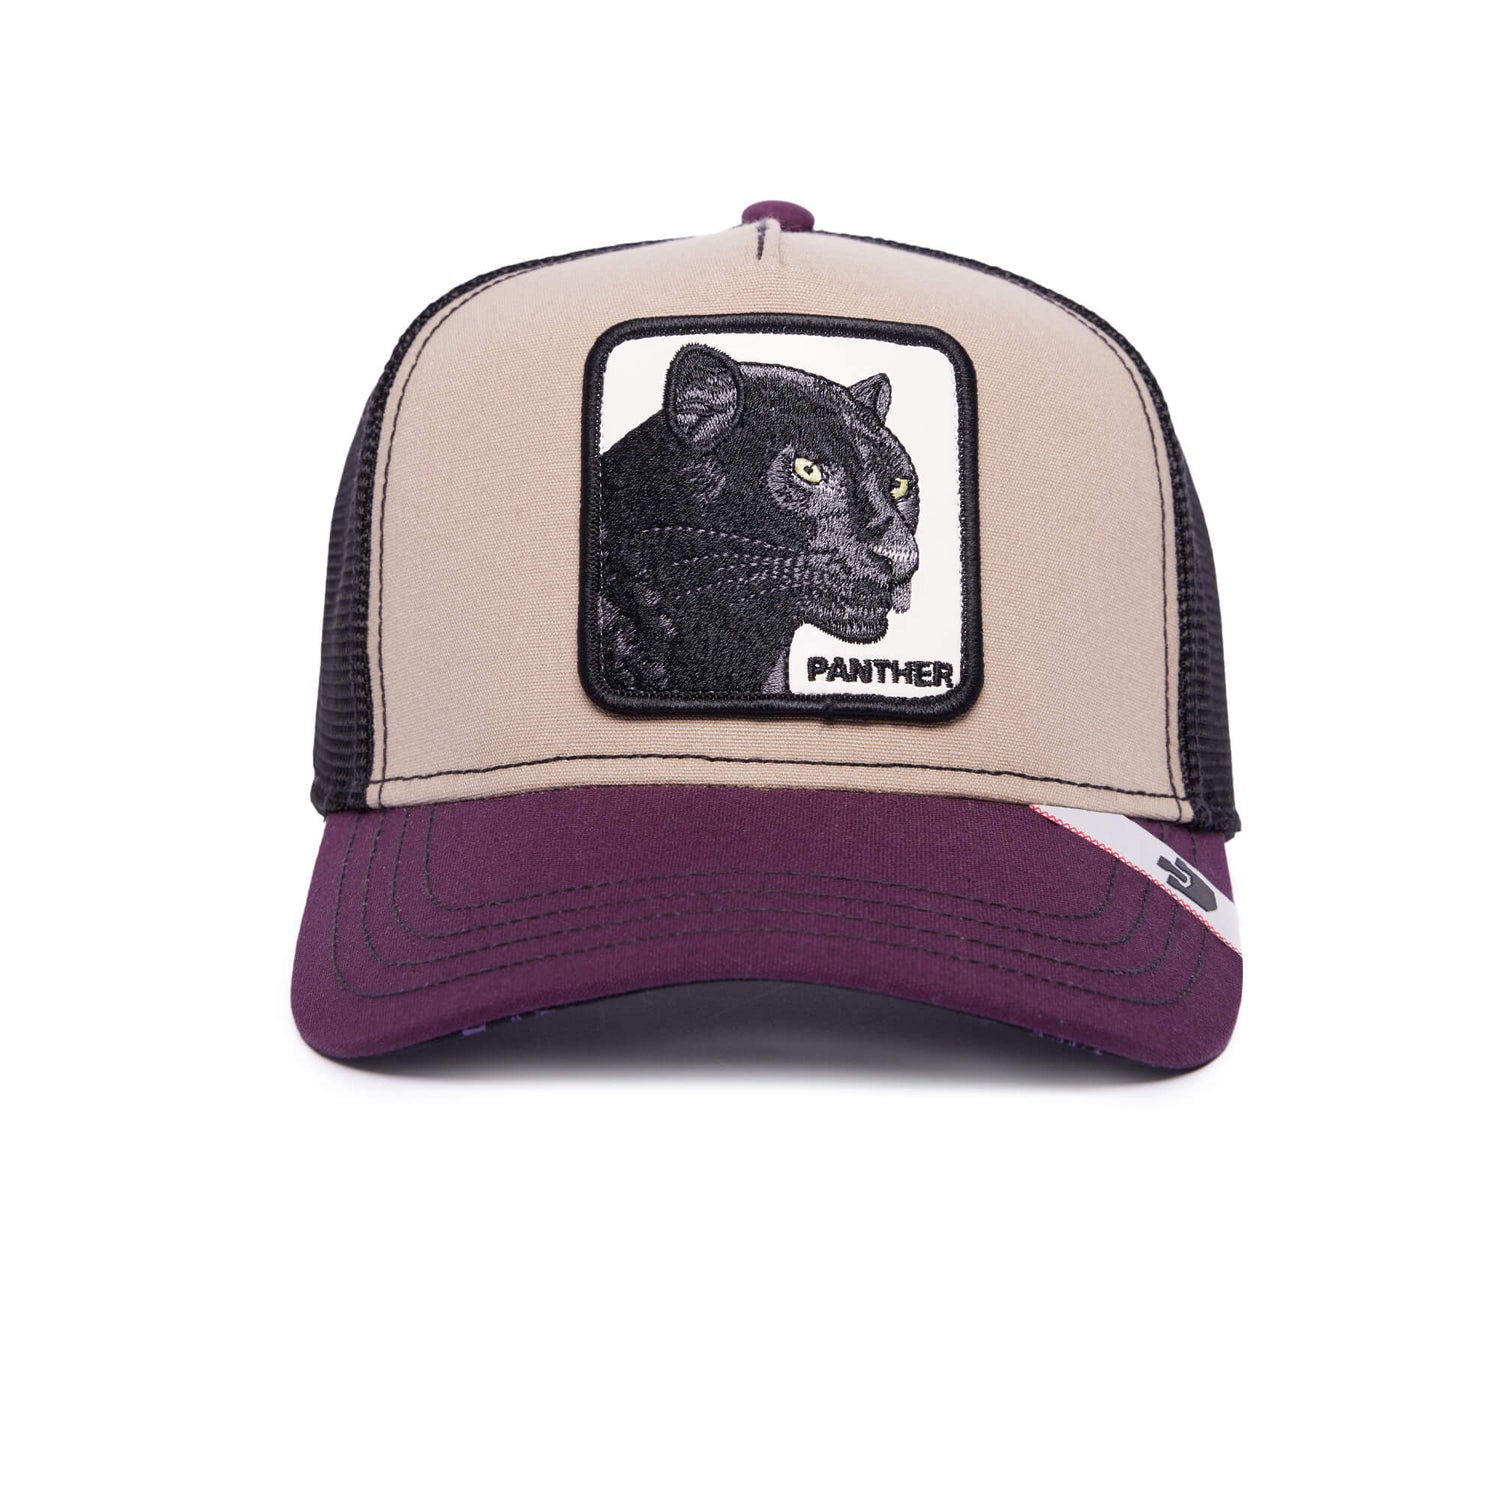 Goorin Bros. Lemur Wired Www.iiired This Is The Drip The Farm Black Trucker  Hat